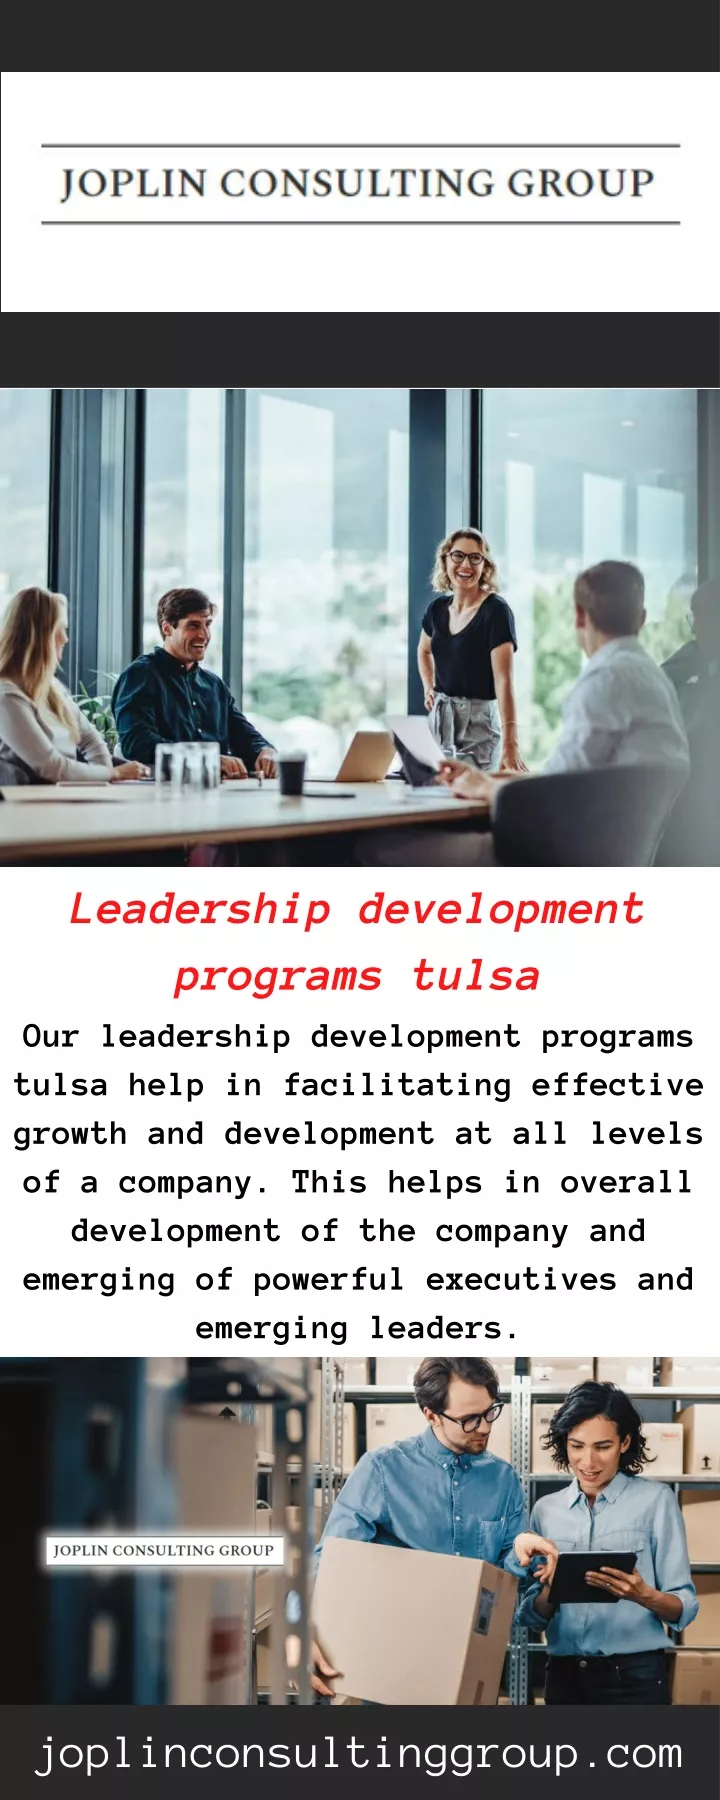 leadership development programs tulsa